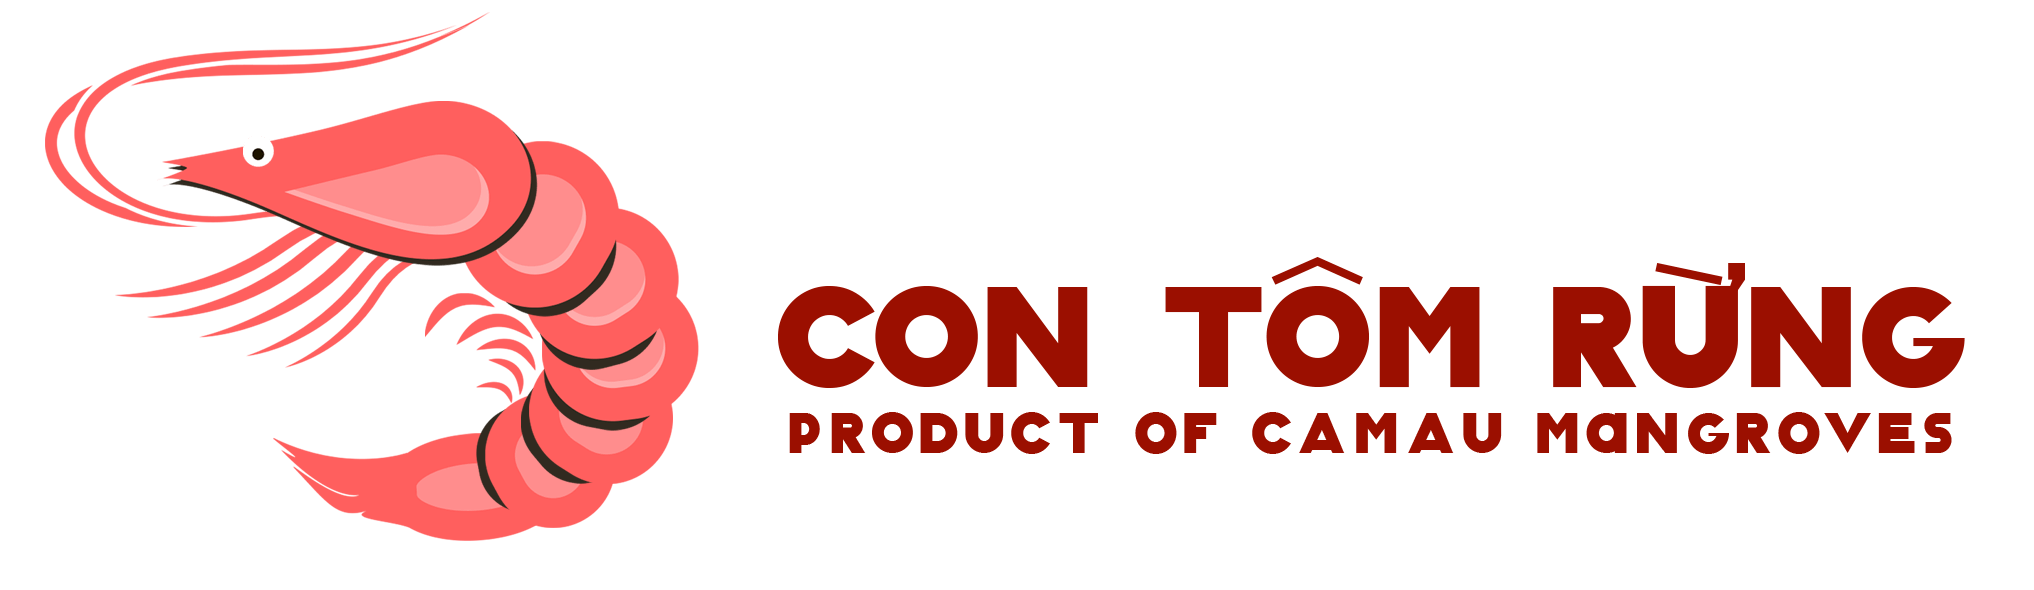 Con Tom Company Limited